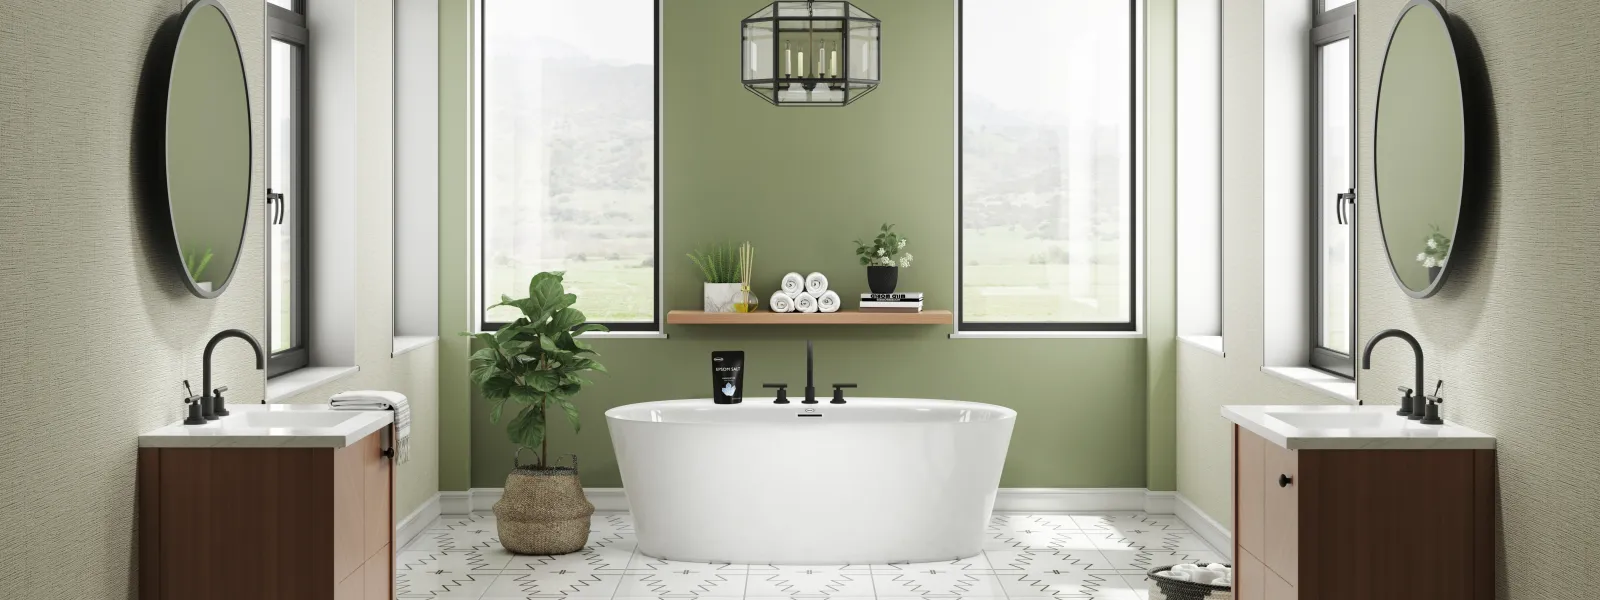 Does a Freestanding Bath Make Sense for Your Bathroom?